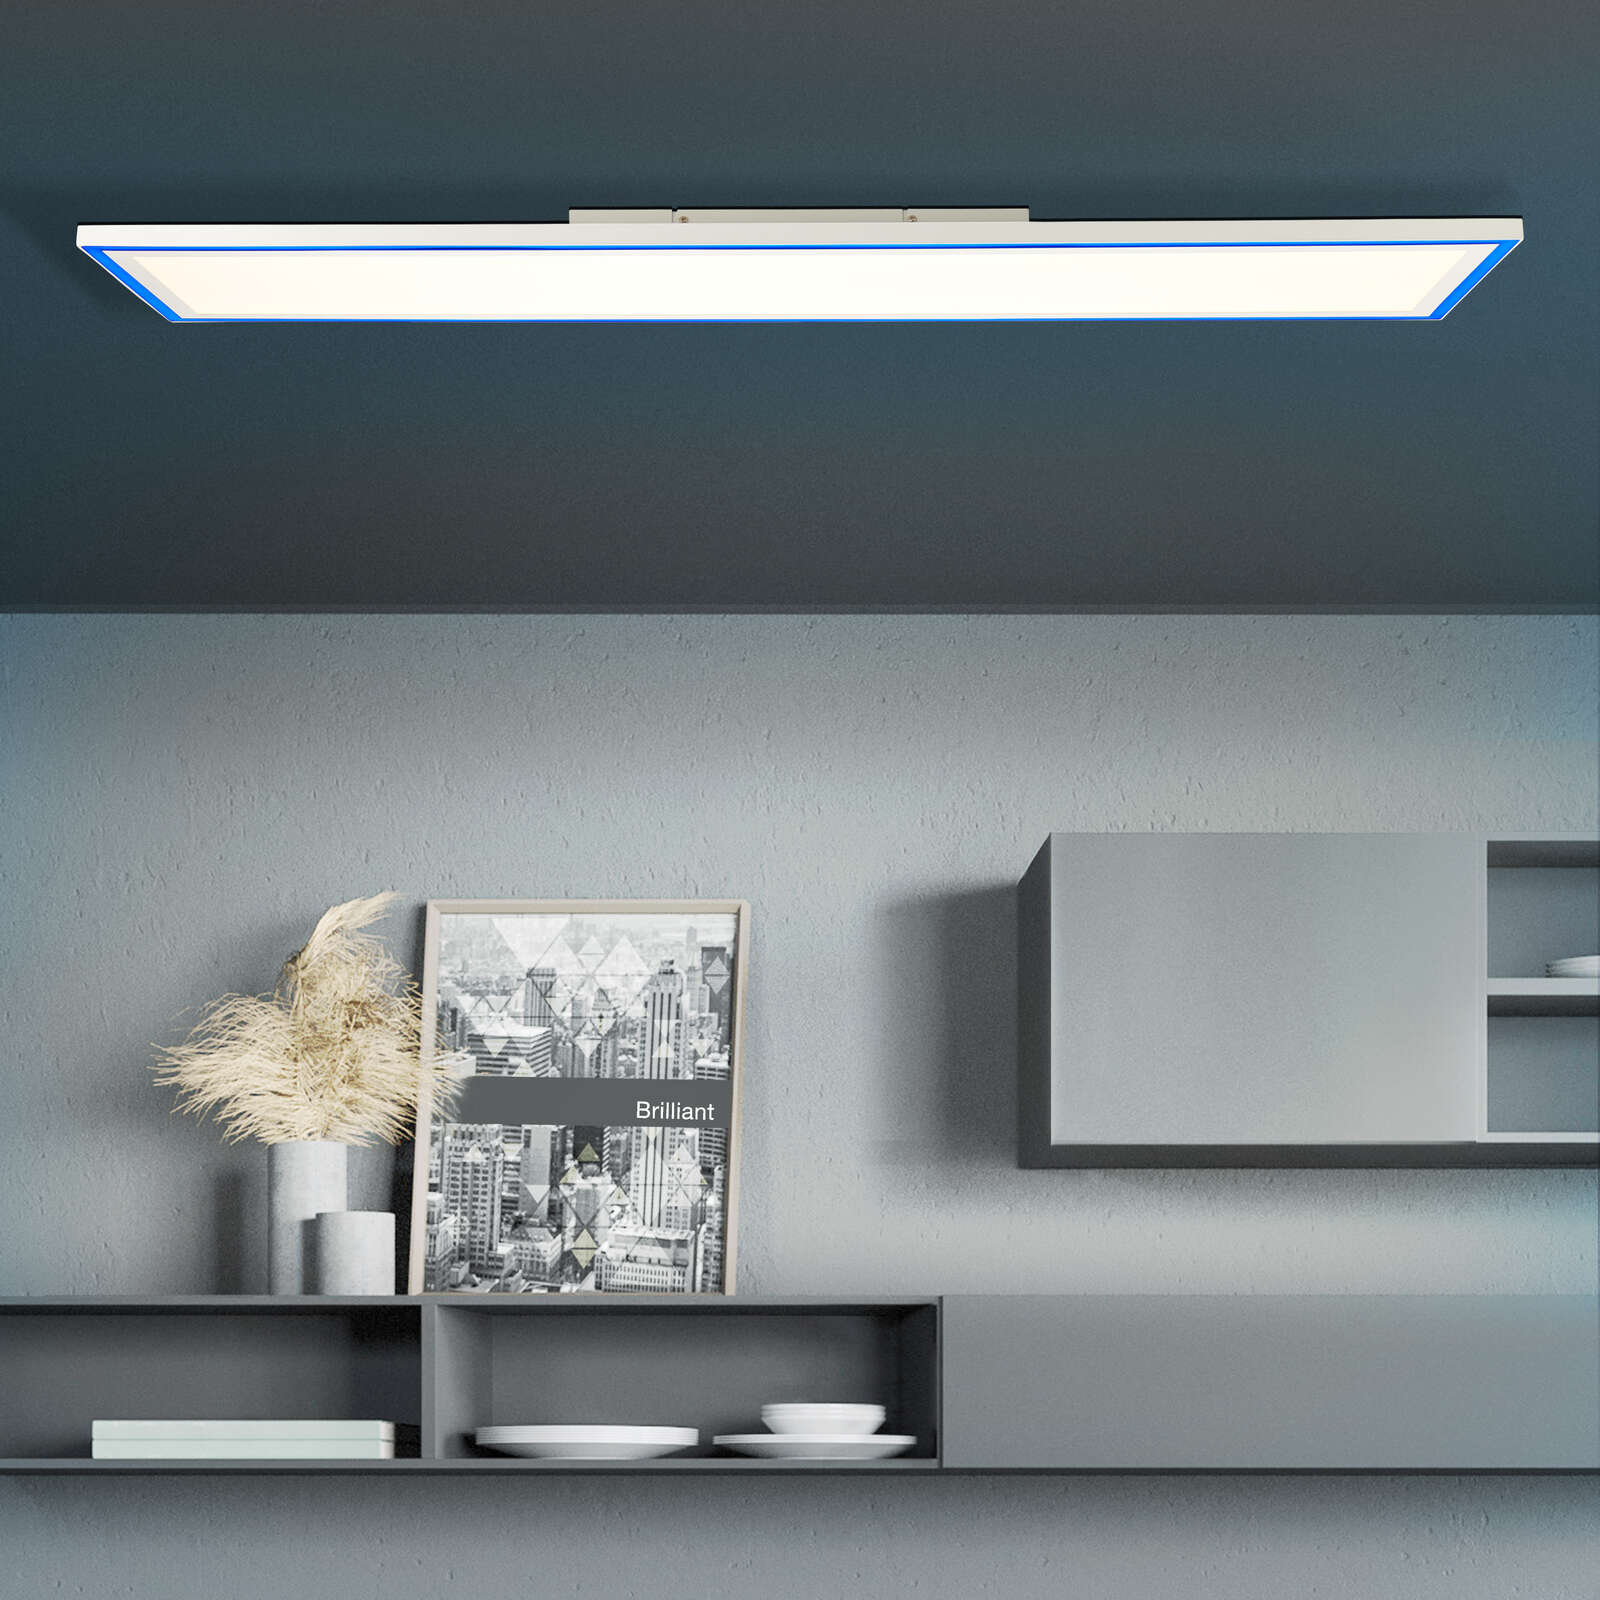             Metal ceiling light - Klaas 3 - White
        